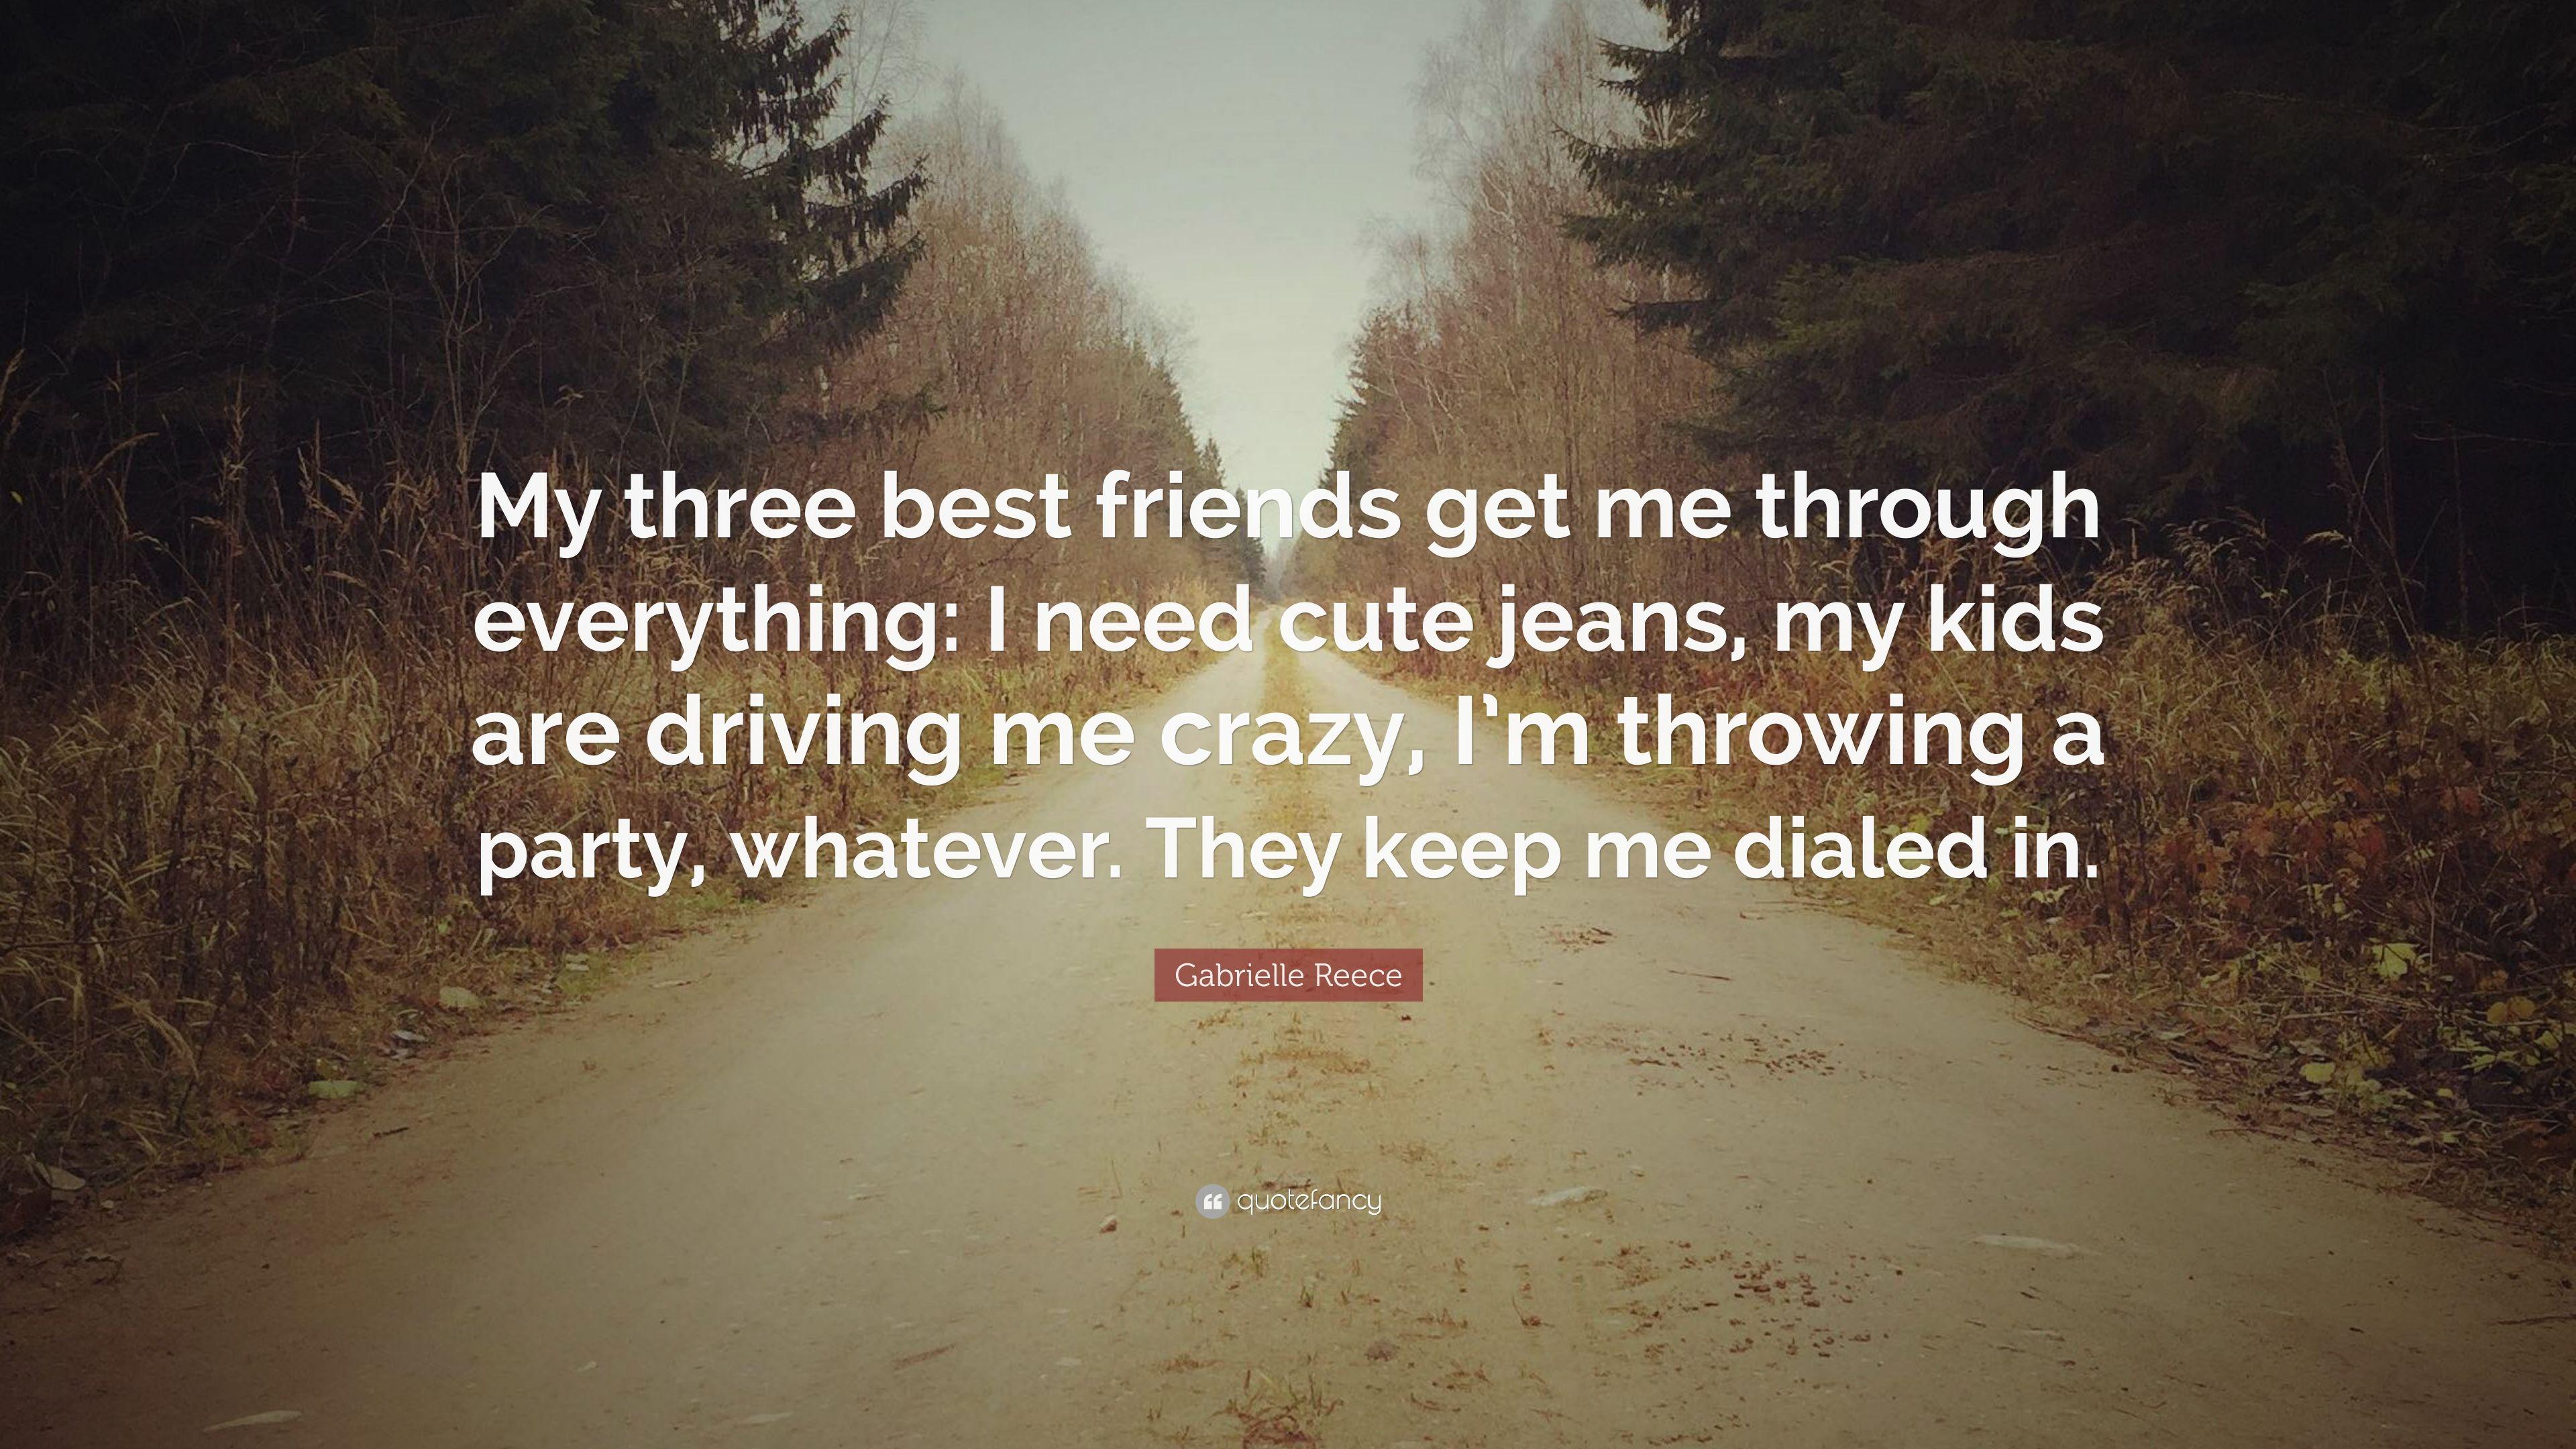 Gabrielle Reece Quote: “My three best friends get me through